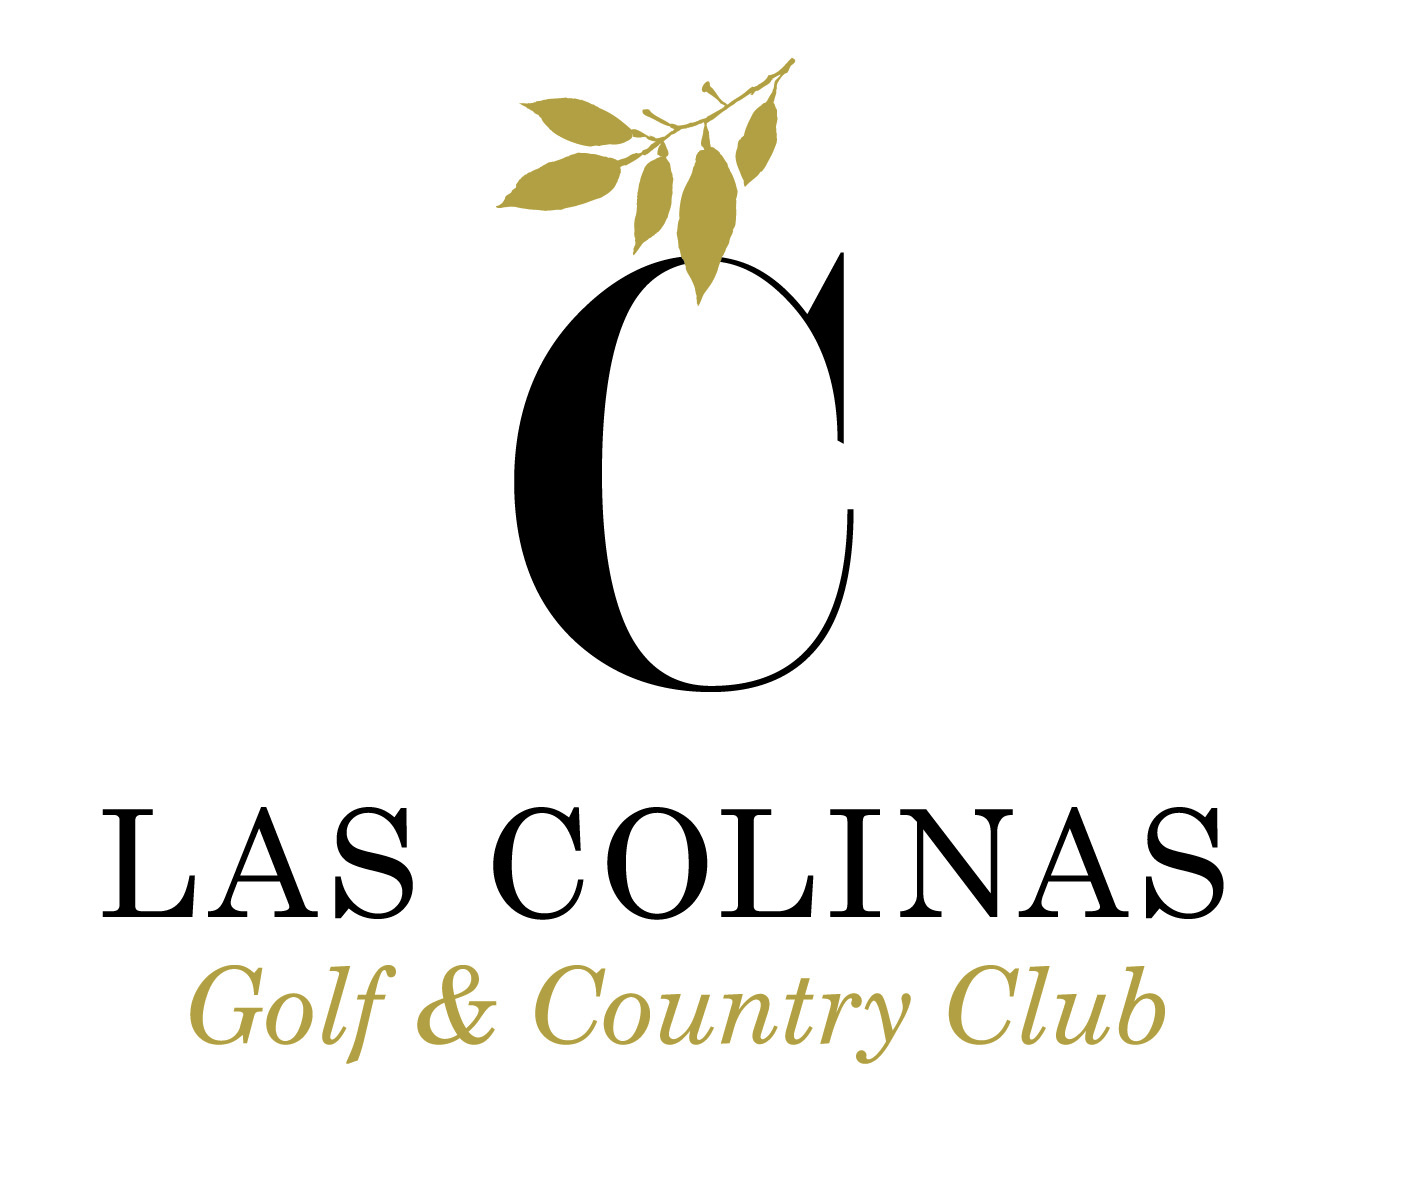 LAS COLINAS GOLF & COUNTRY CLUB